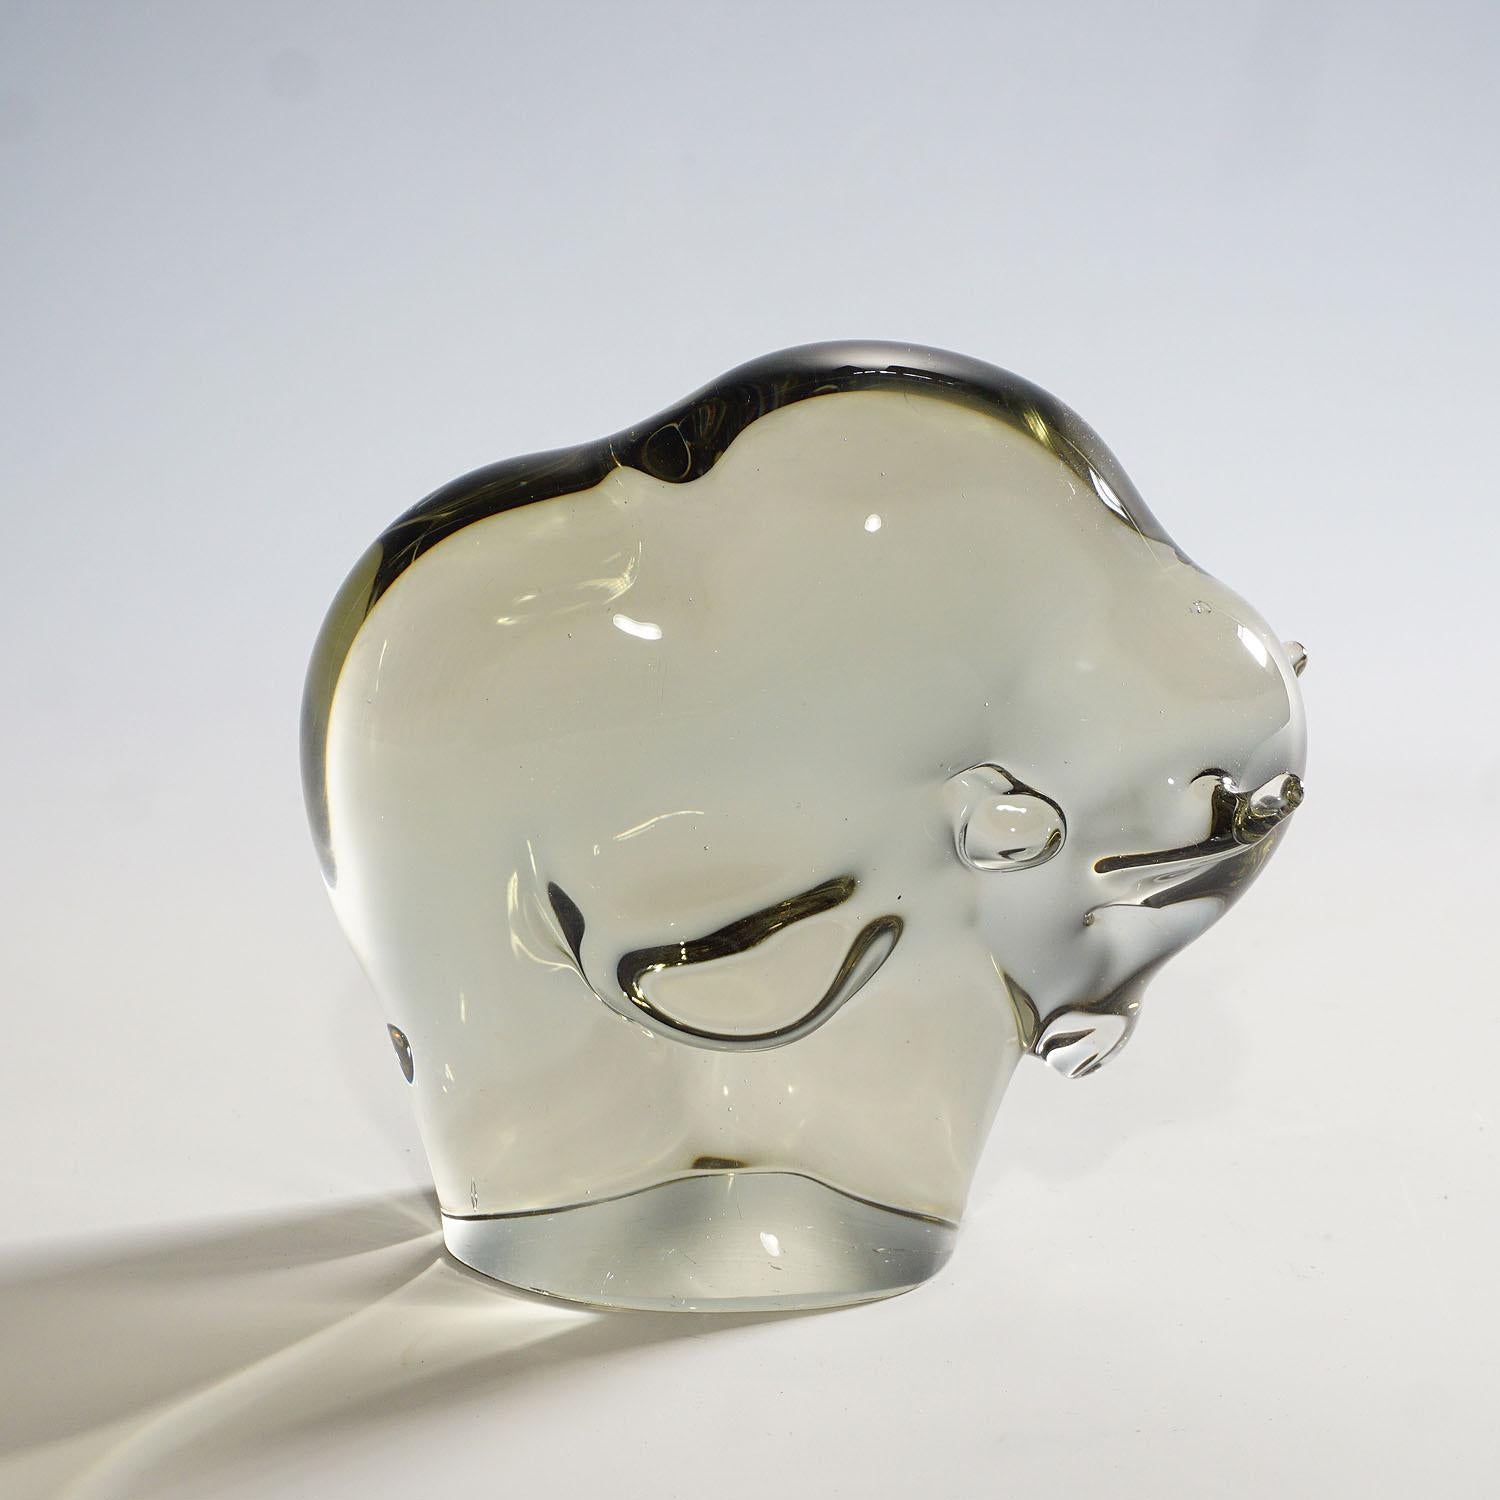 German Glass Sculpture of a Bison Designed by Livio Seguso, ca. 1970s